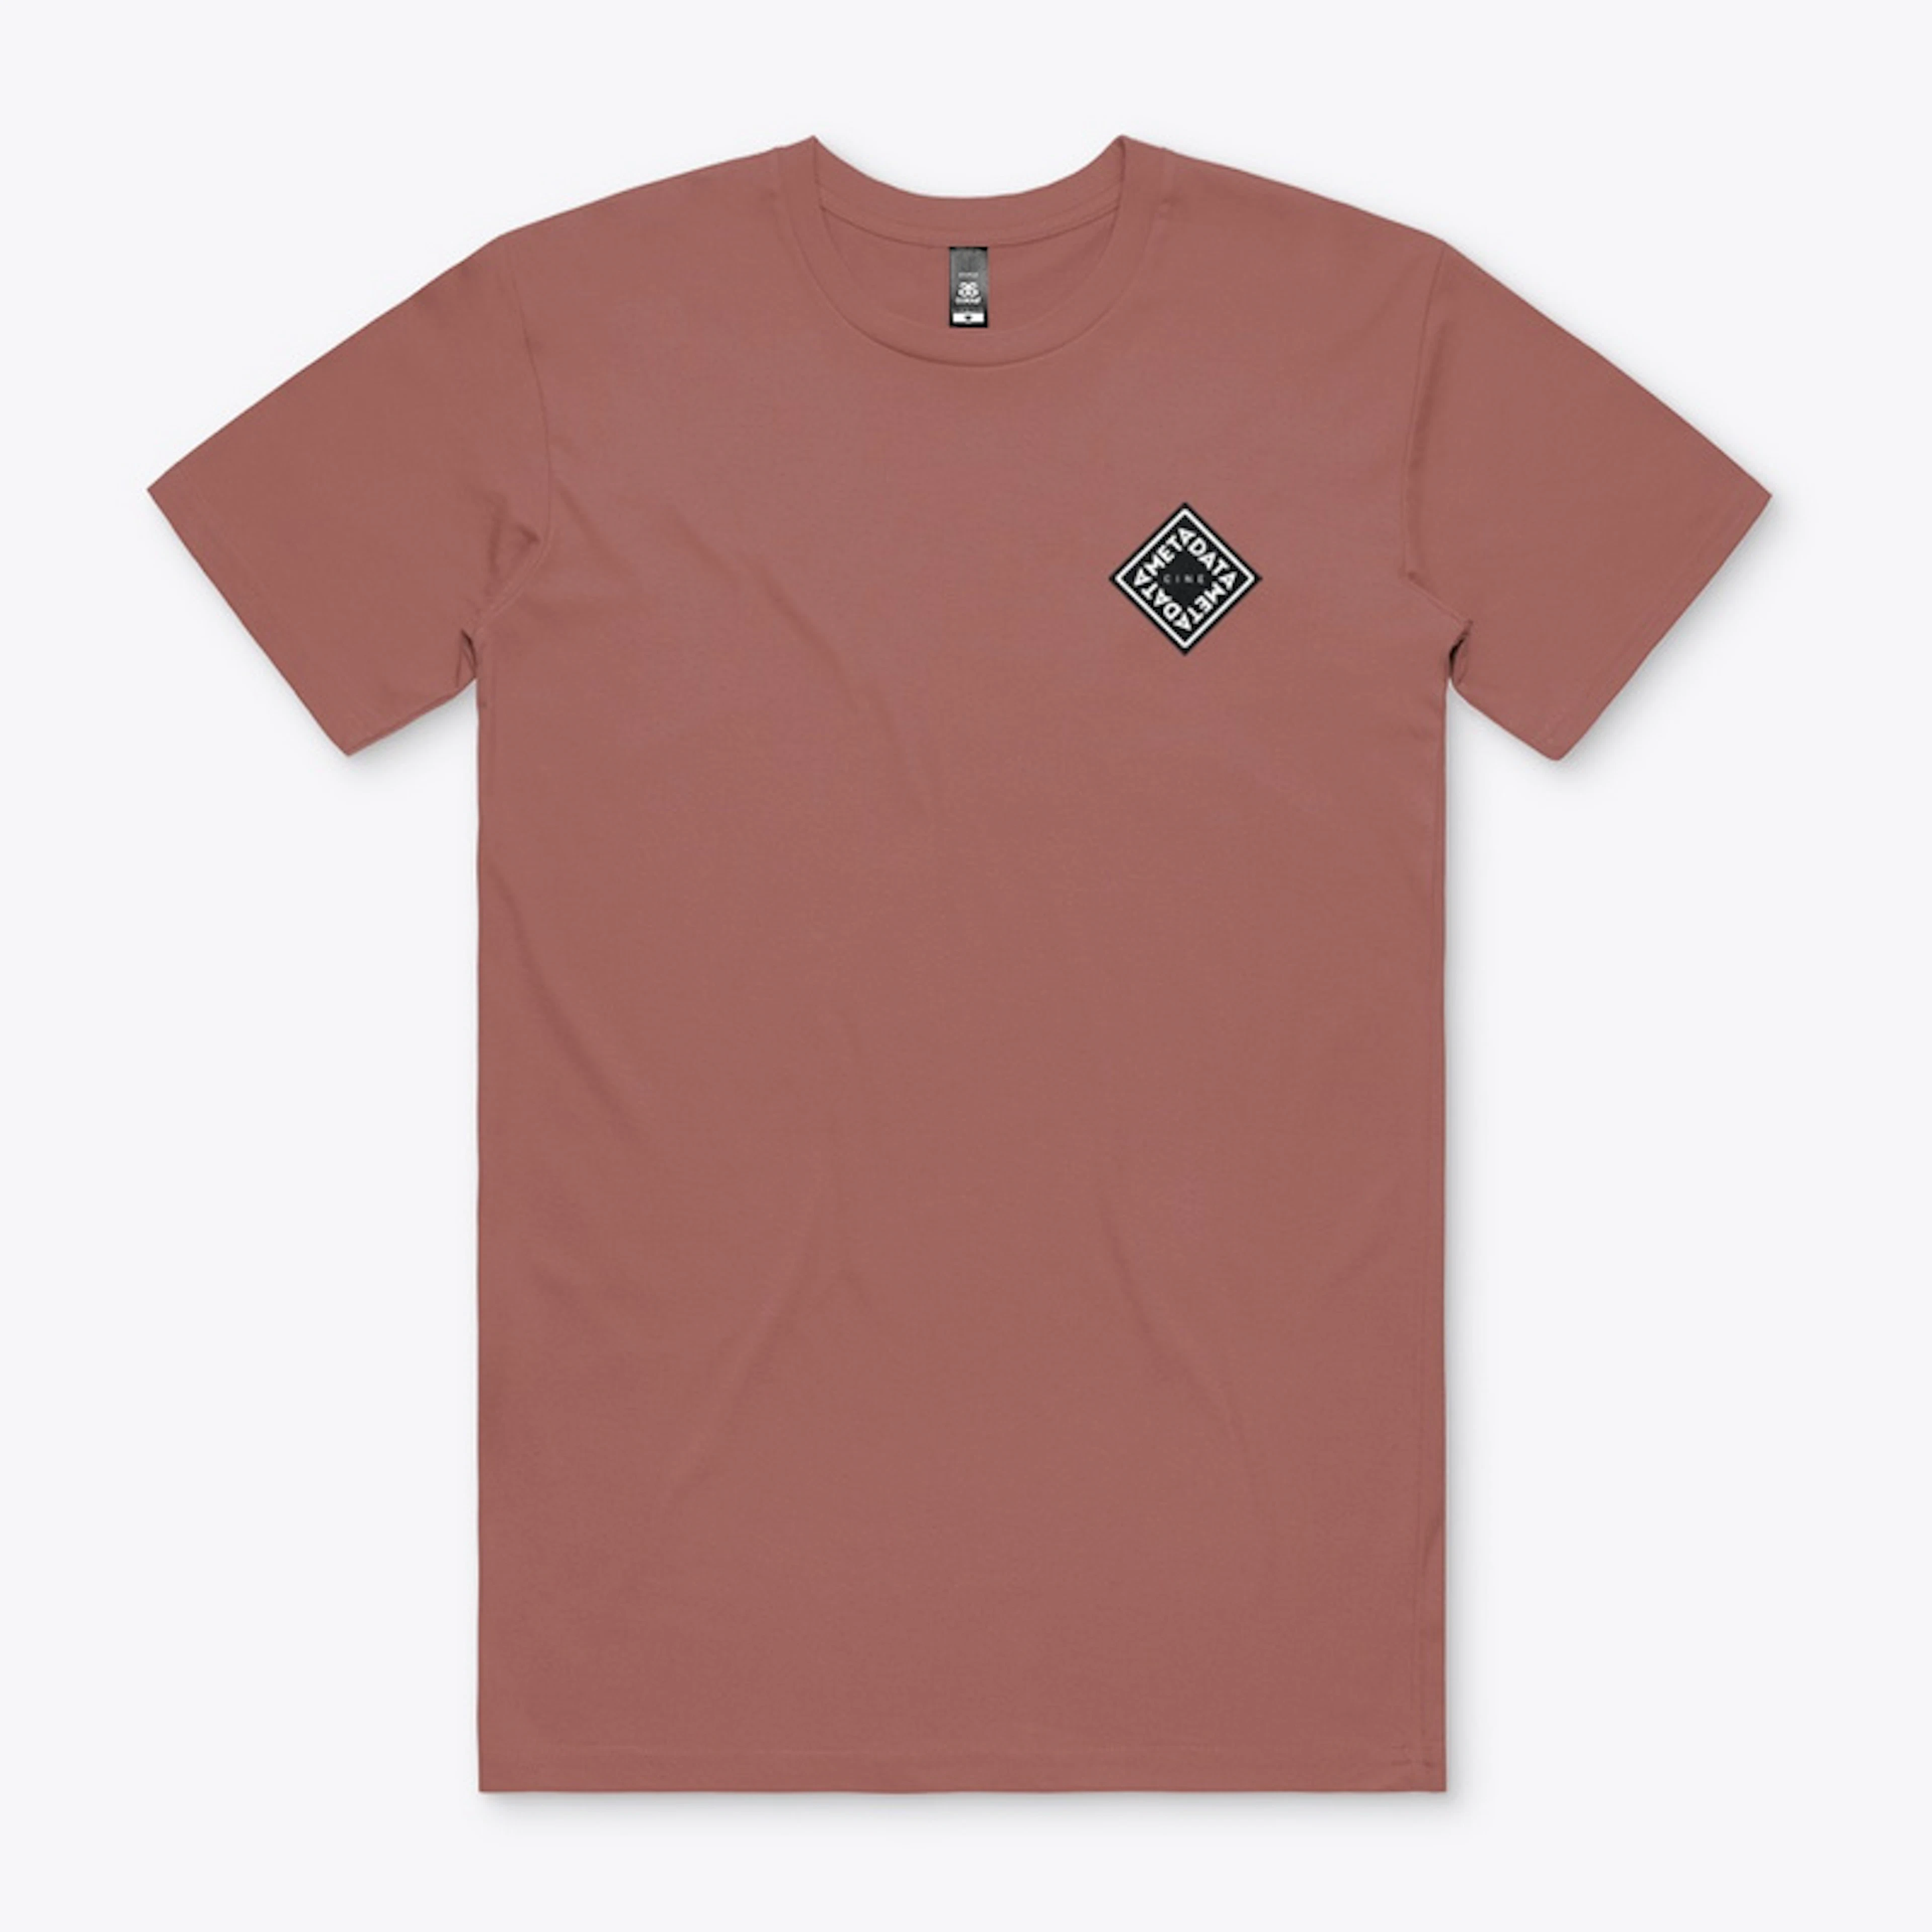 Black Diamond Ltd. T-Shirt - Salmon